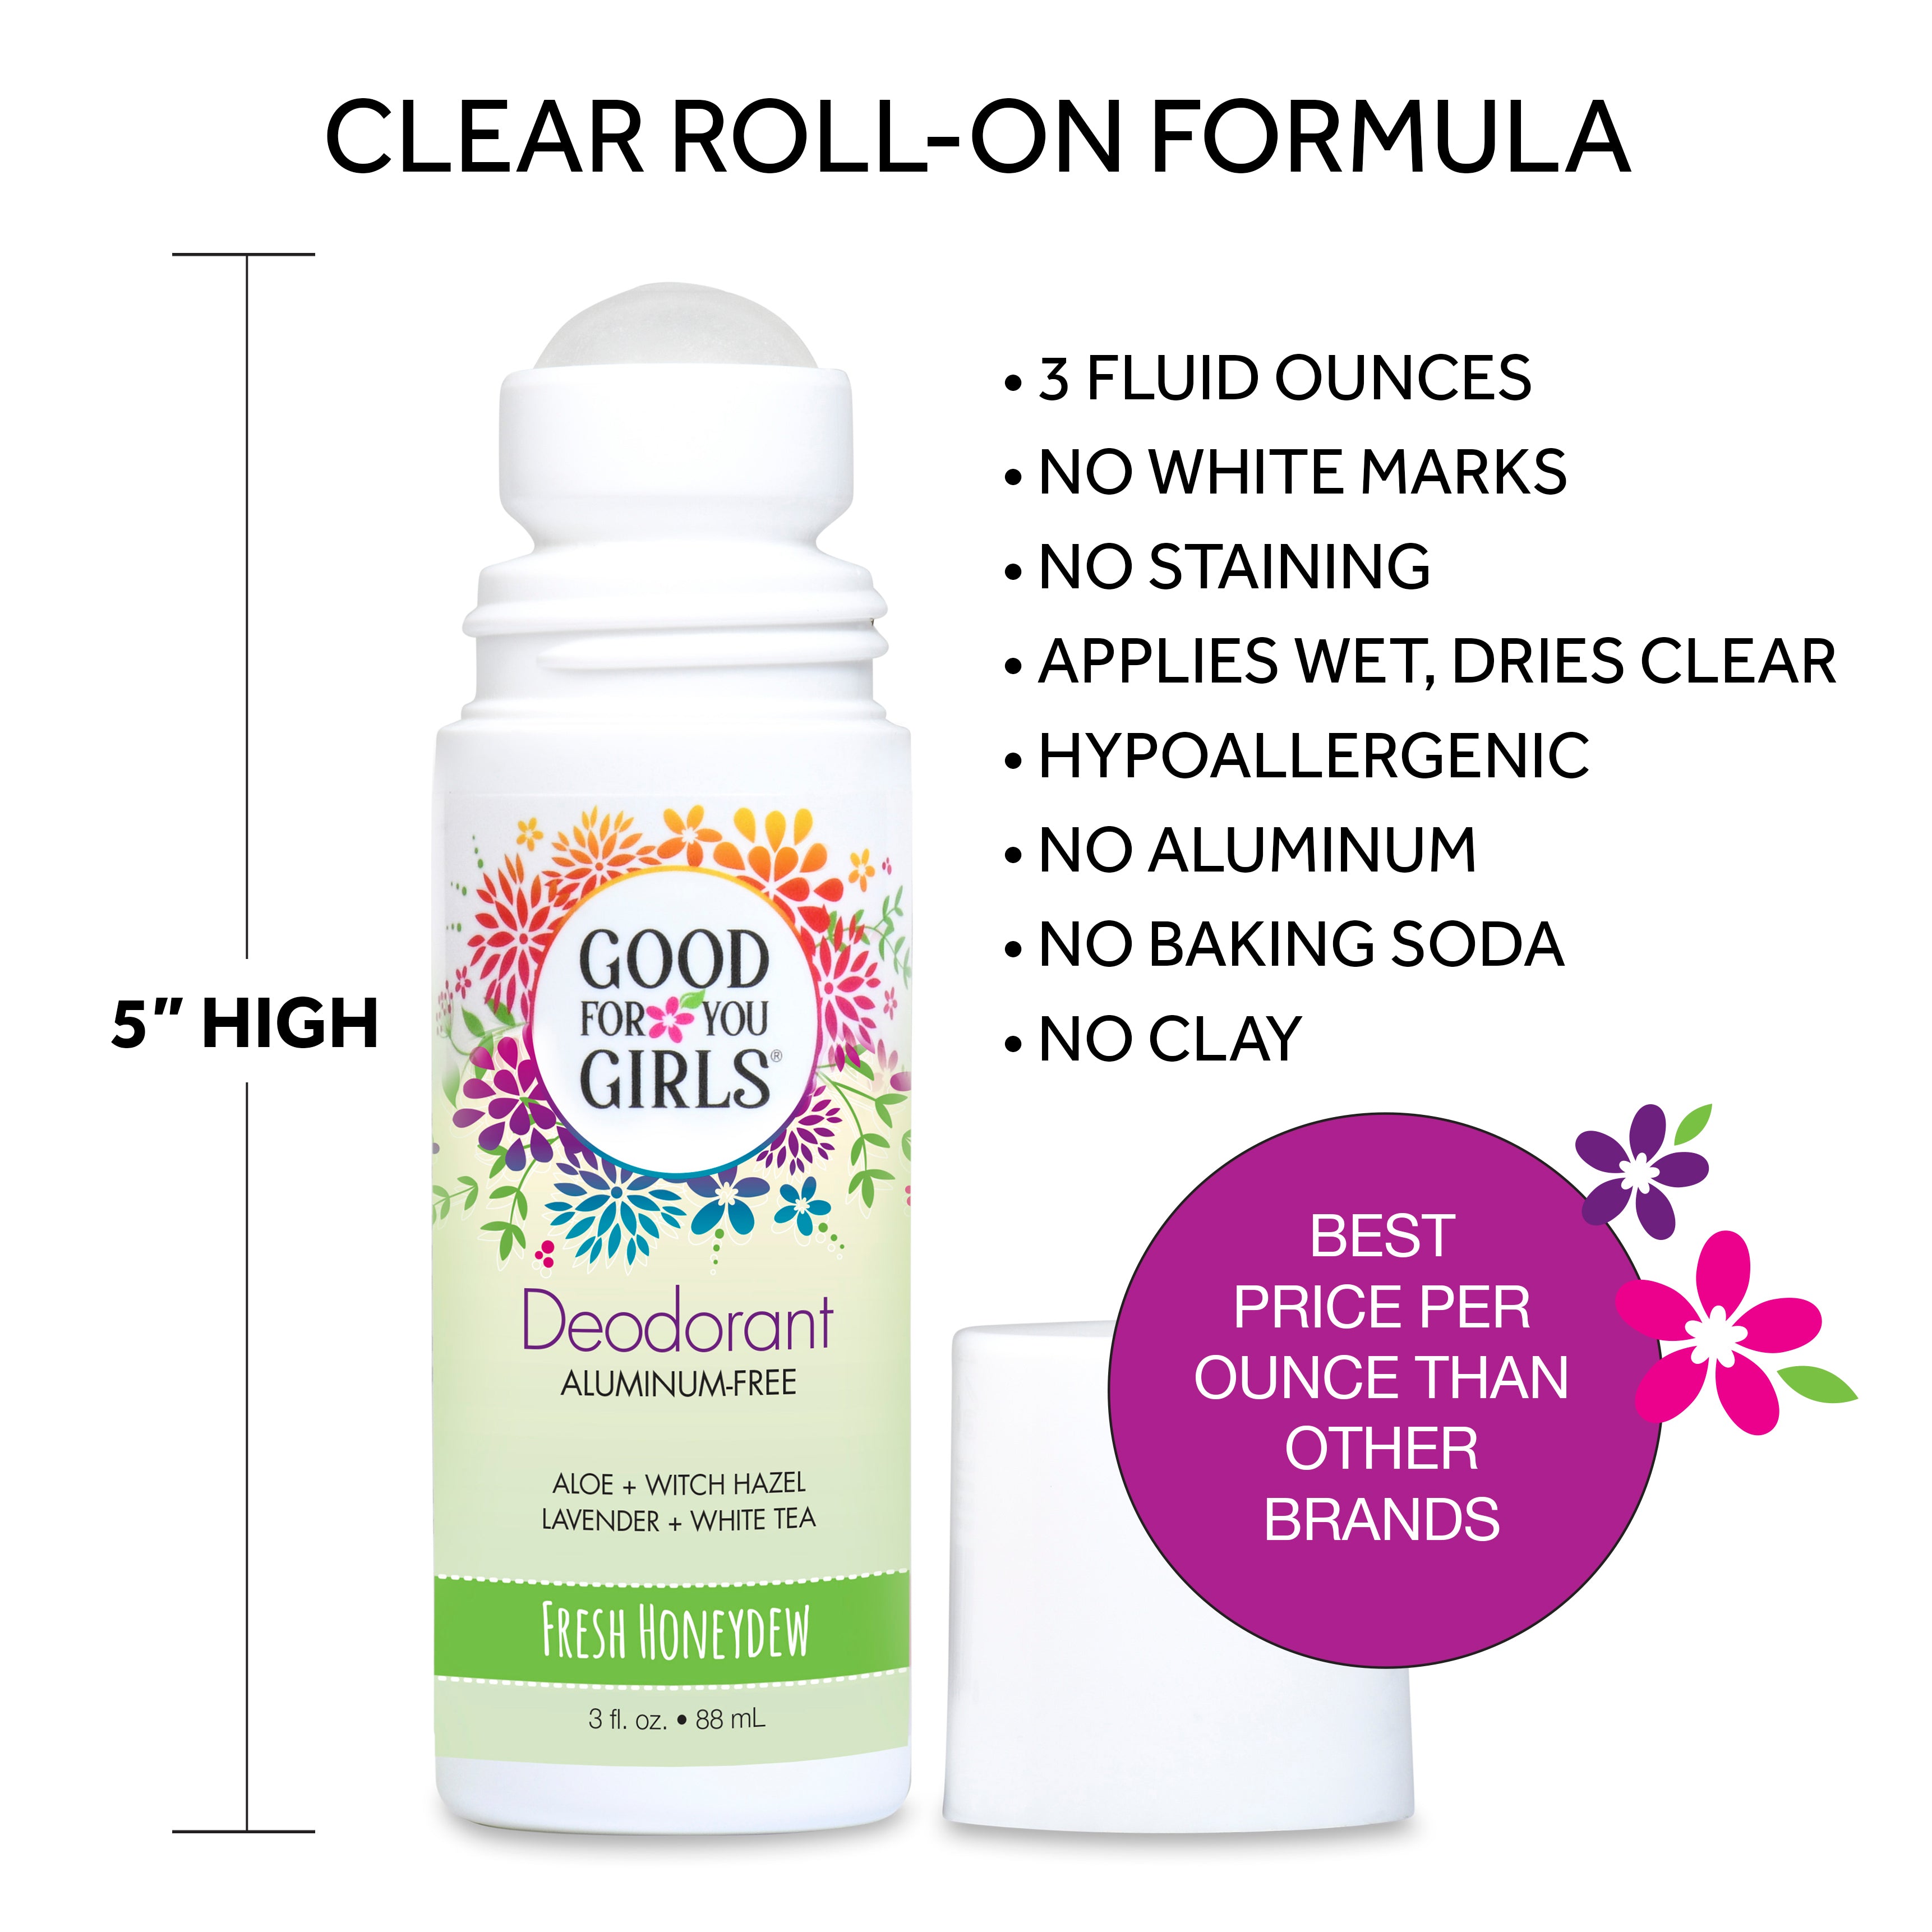 Benefits of Clear Roll-On Deodorant Formula